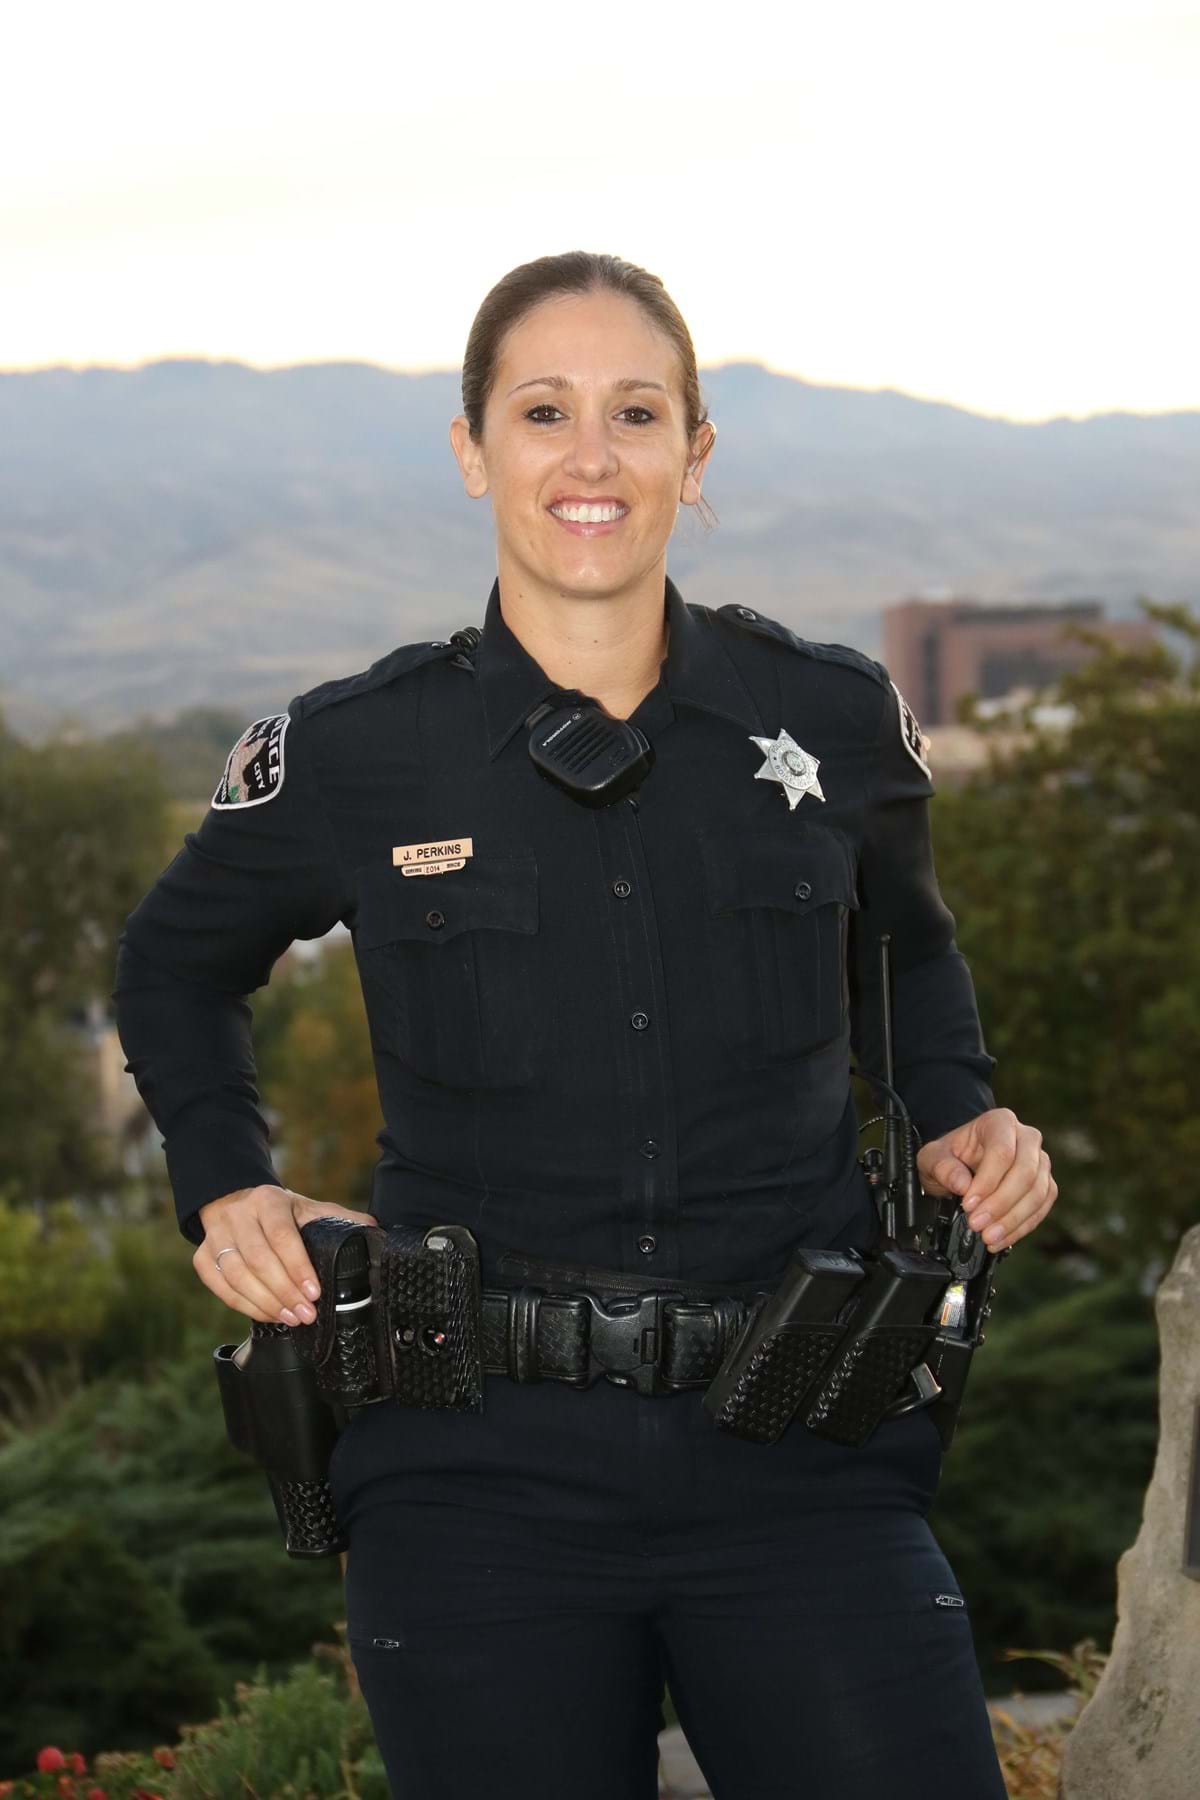 Officer Jessica Knarr